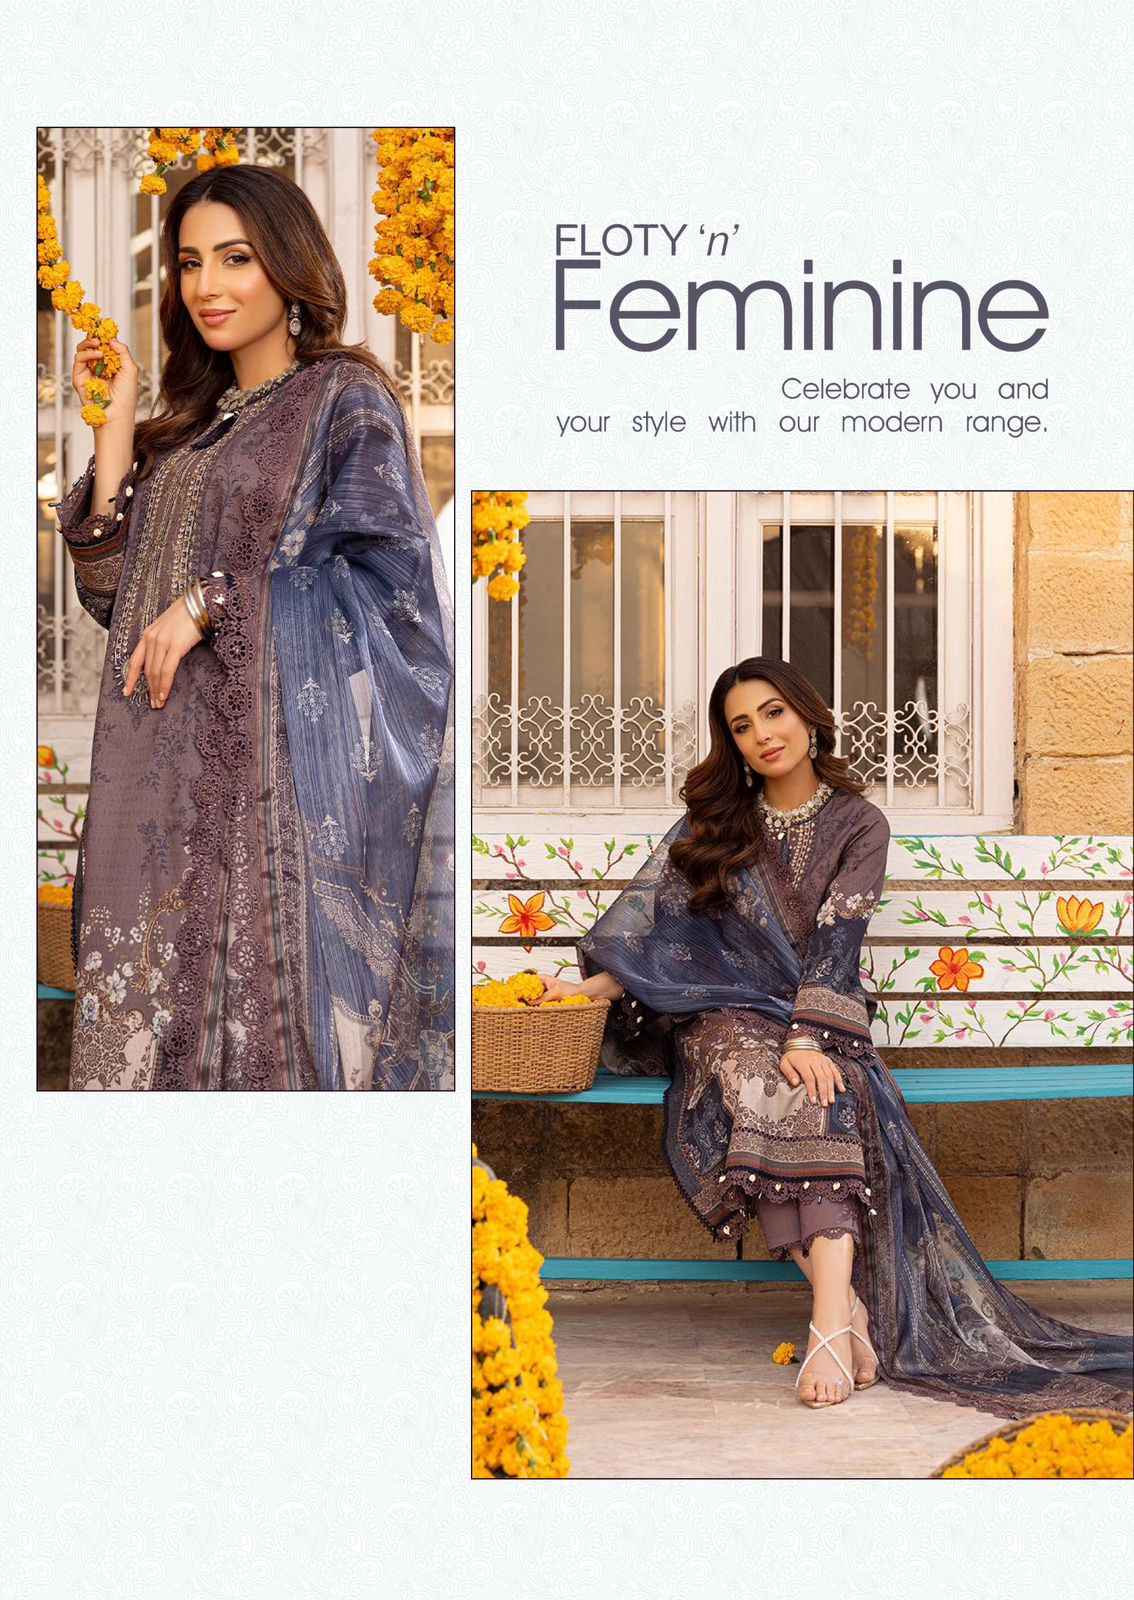 Madhav Fashion Riwaaz Vol-8 Lawn Cotton Dress Material (6 pcs catalog)